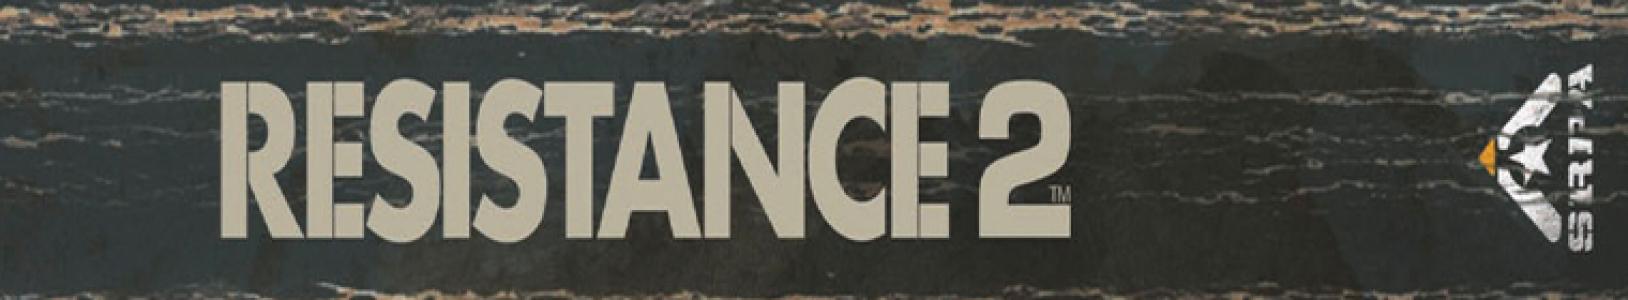 banner(s)